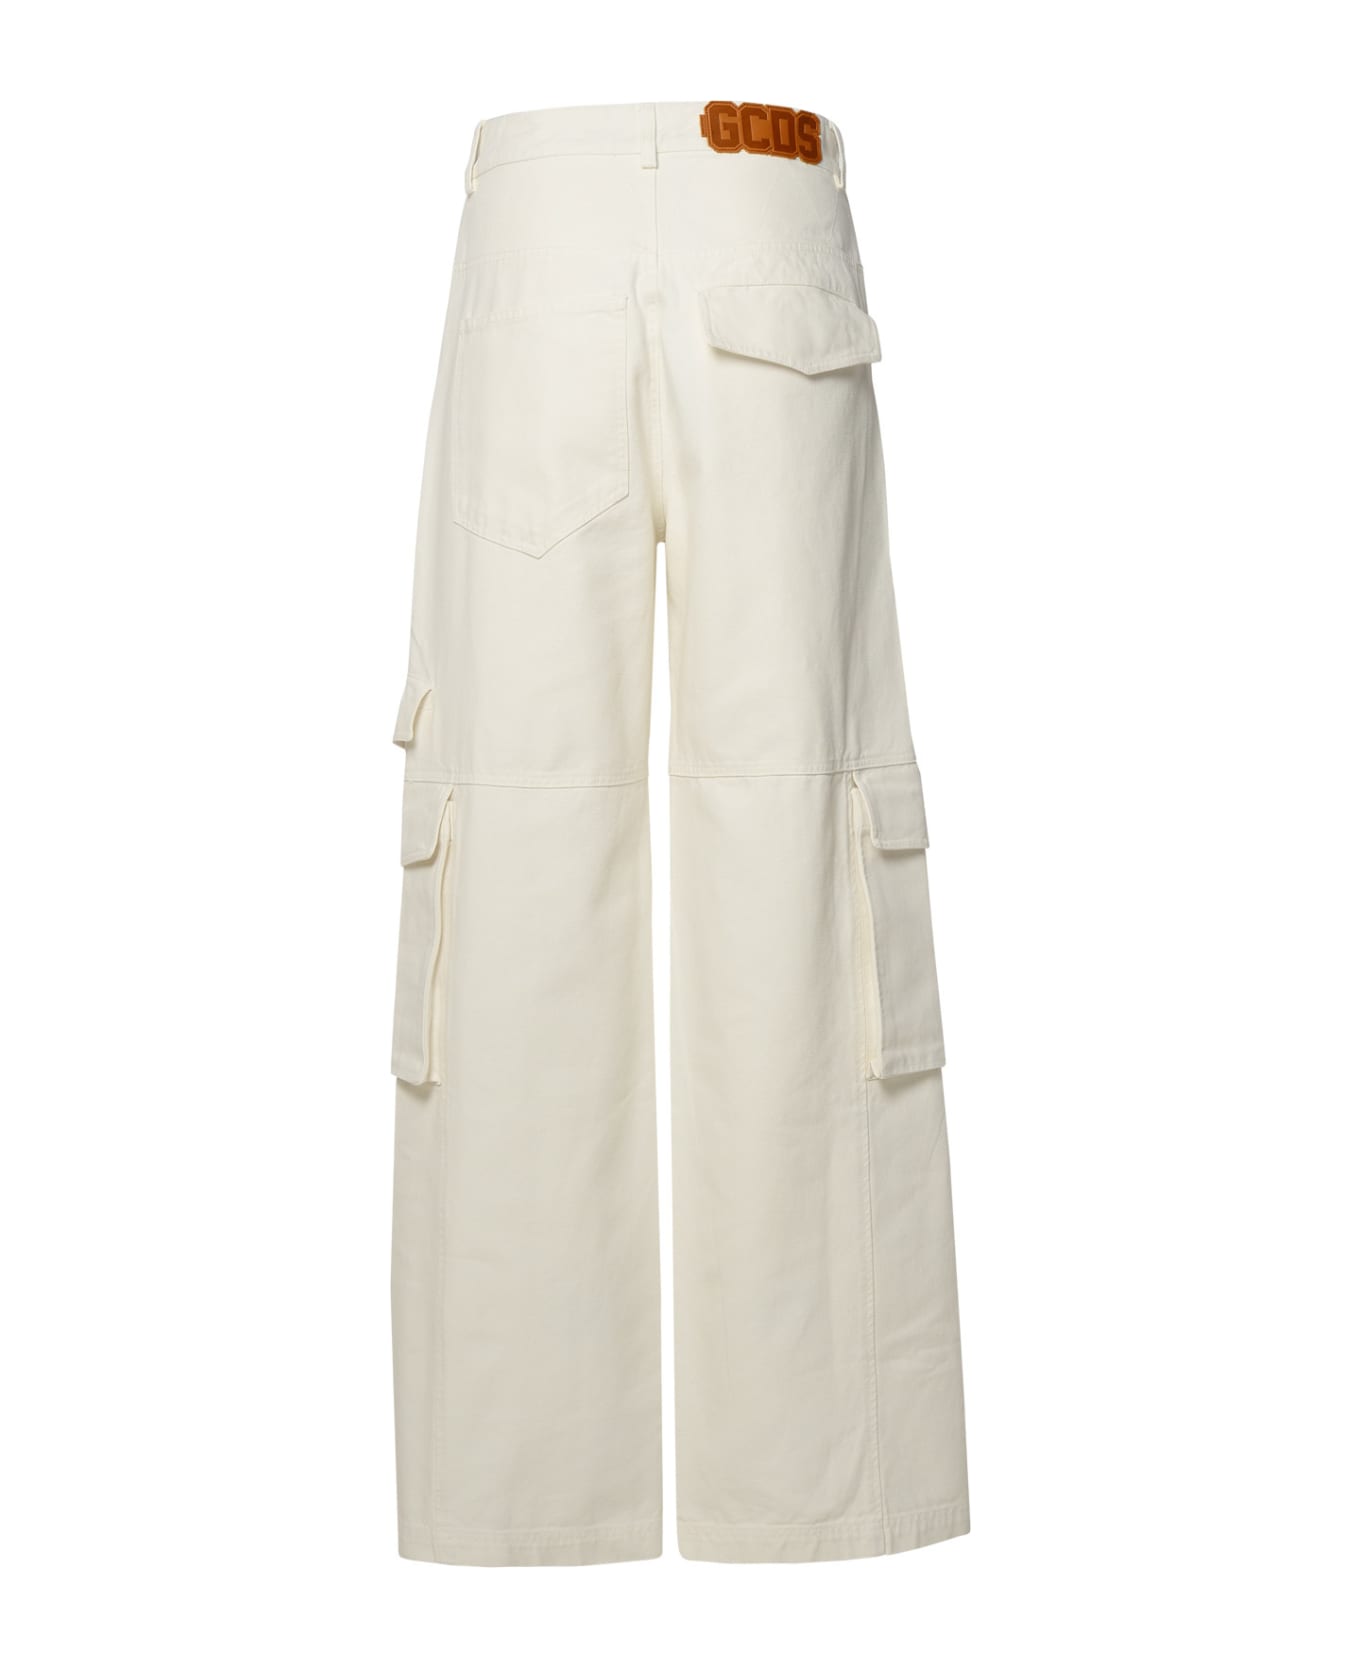 GCDS White Cotton Jeans - White